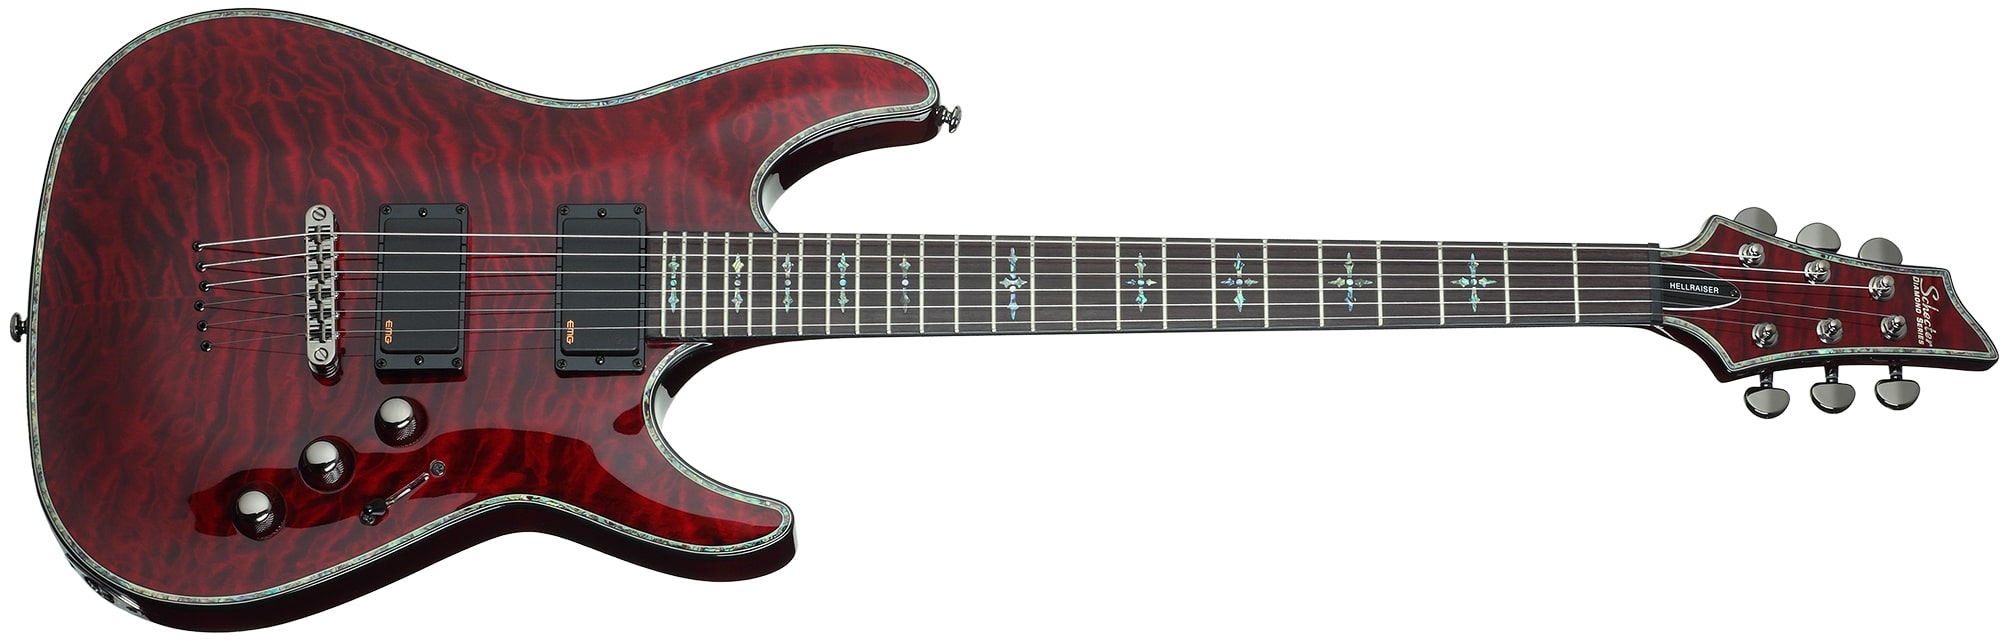 Schecter Hellraiser C-1 Electric Guitar - Black Cherry 1788-SHC - The Guitar World